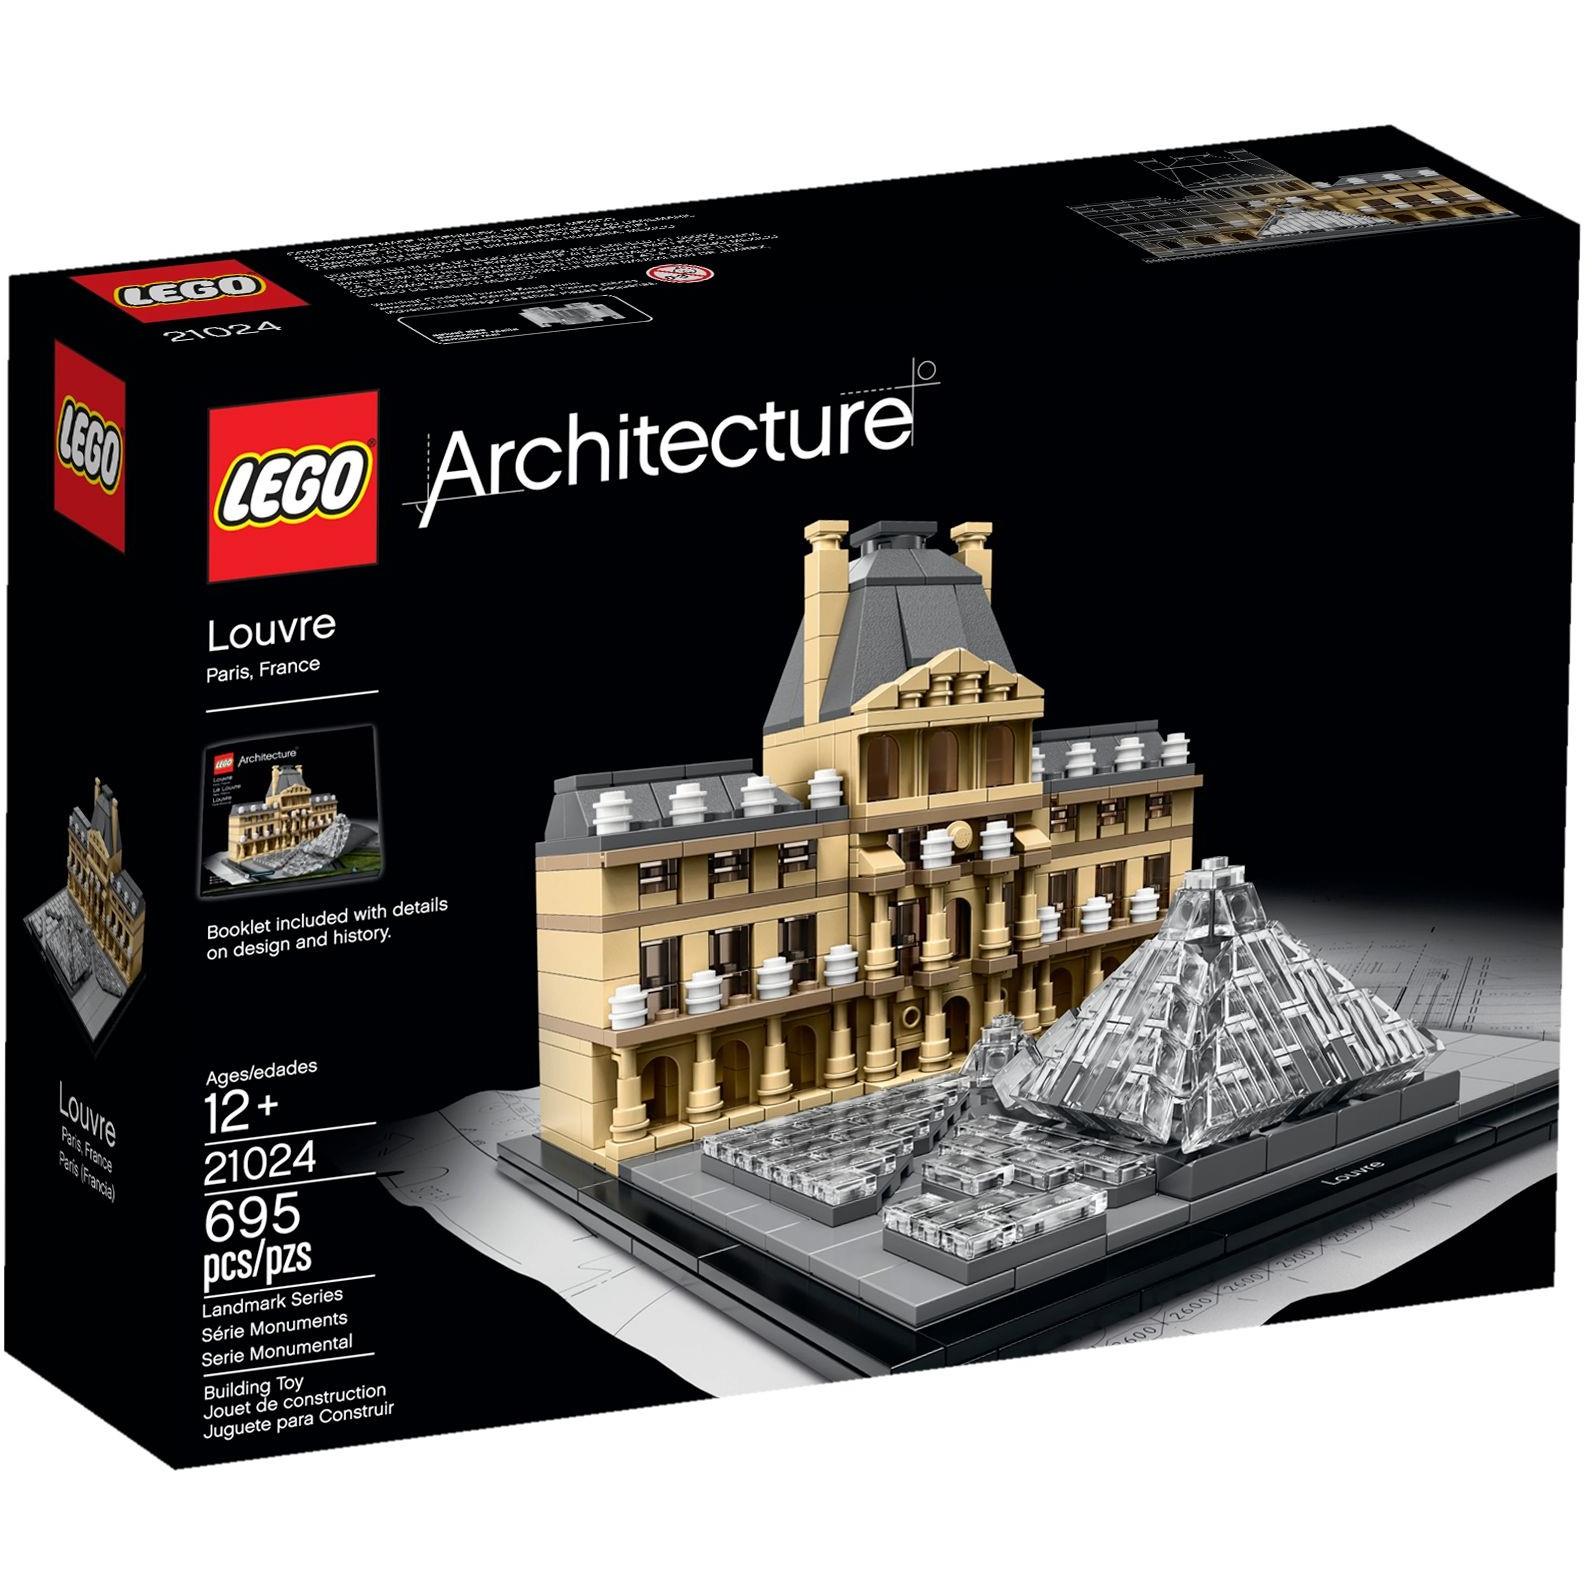 21024 LEGO Architecture Louvre